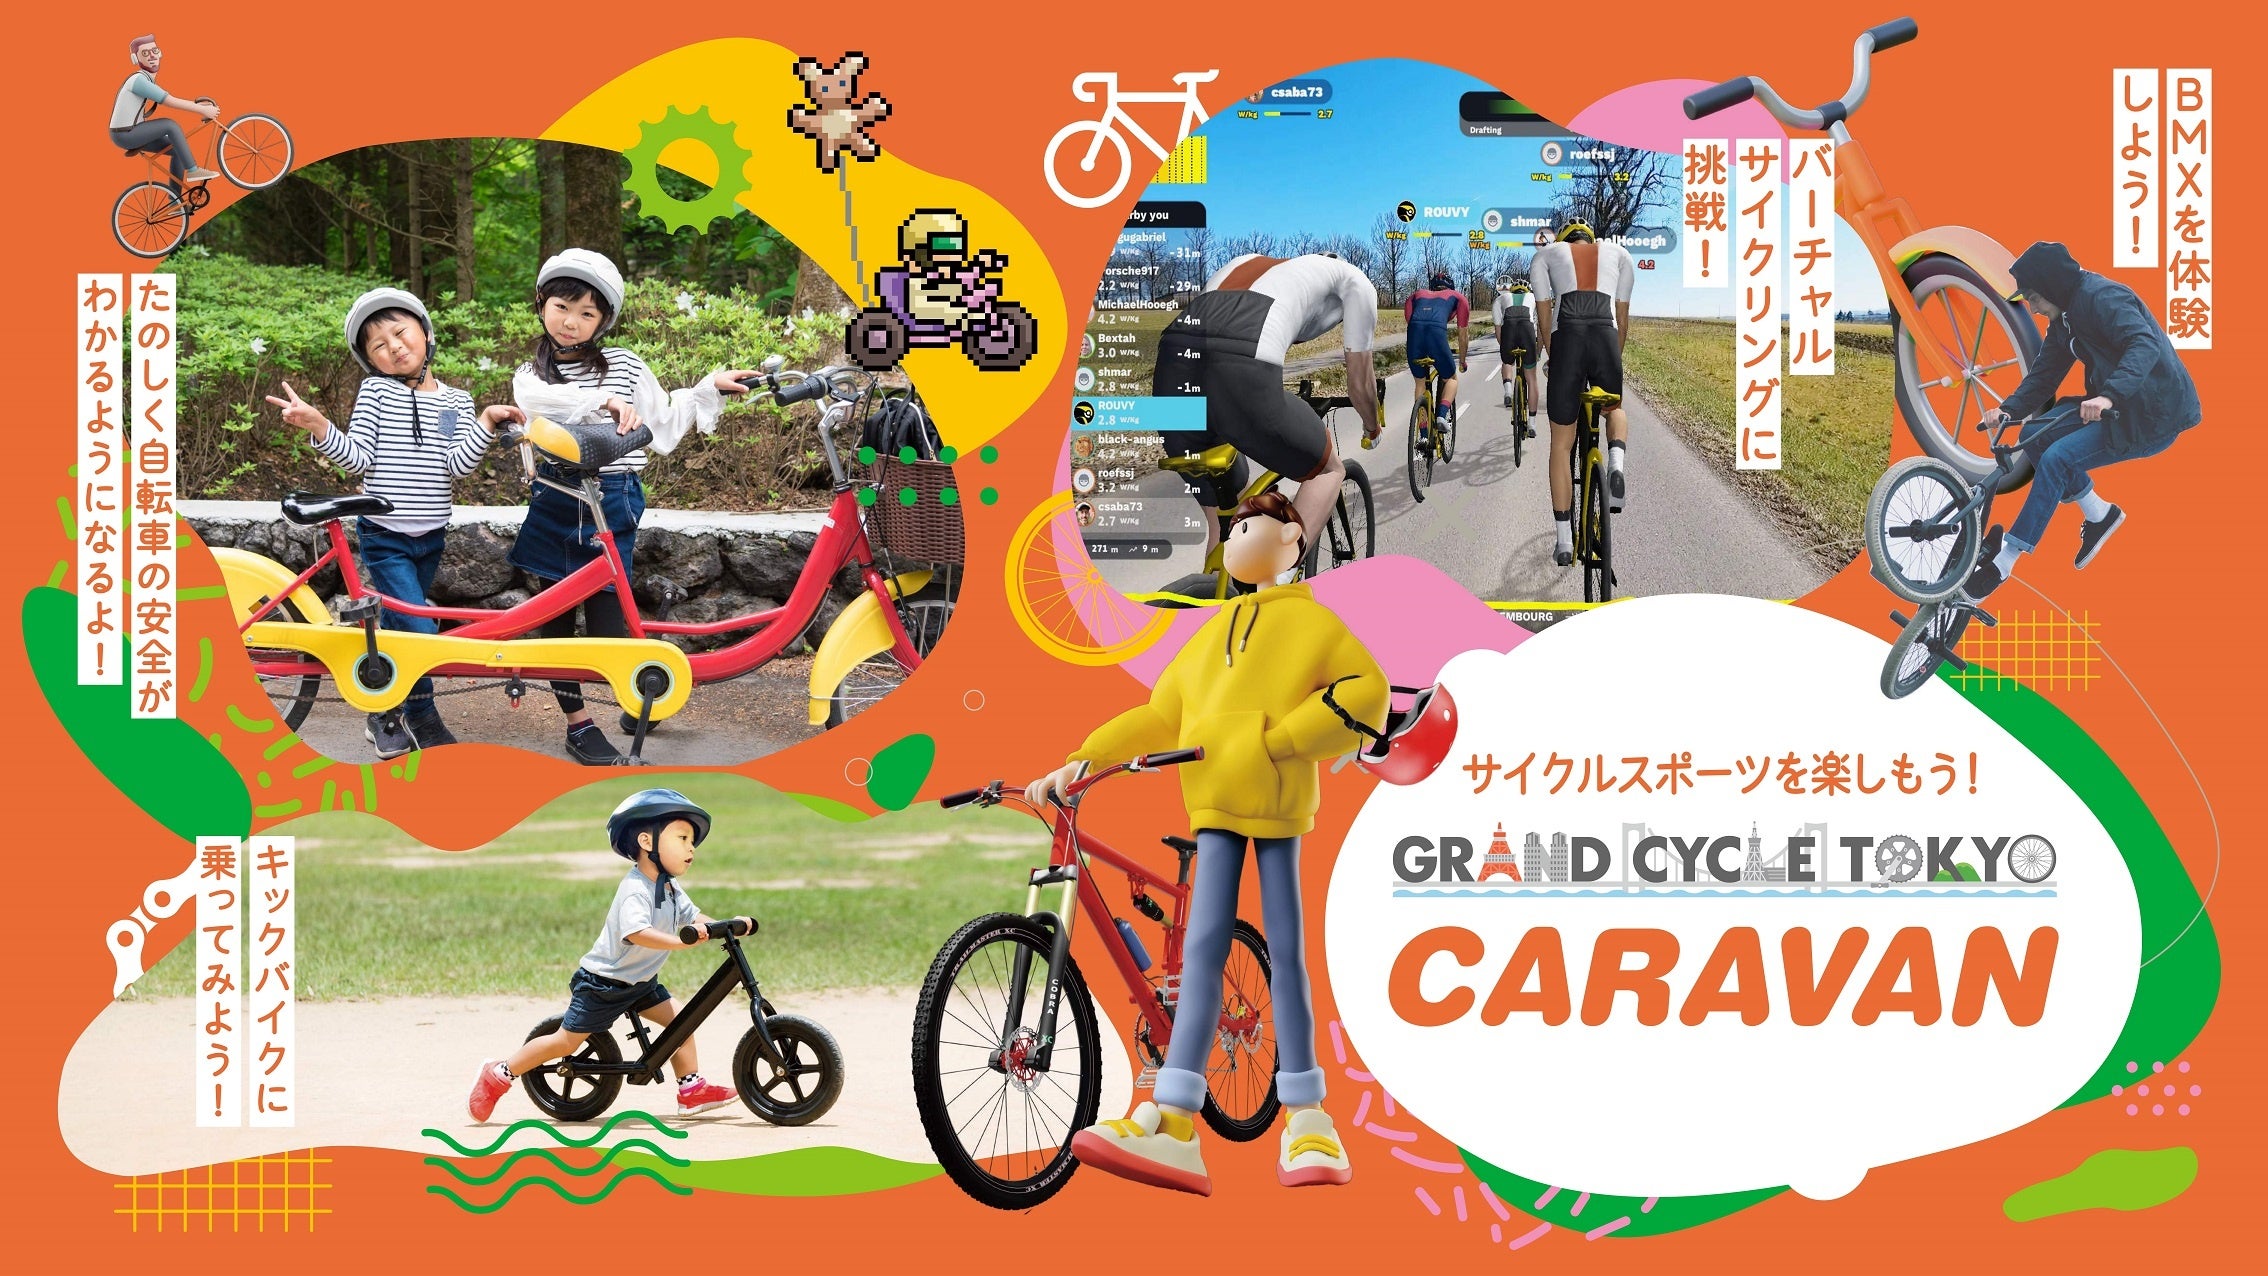 GRAND CYCLE TOKYO CARAVAN 3e@ڍ׌I